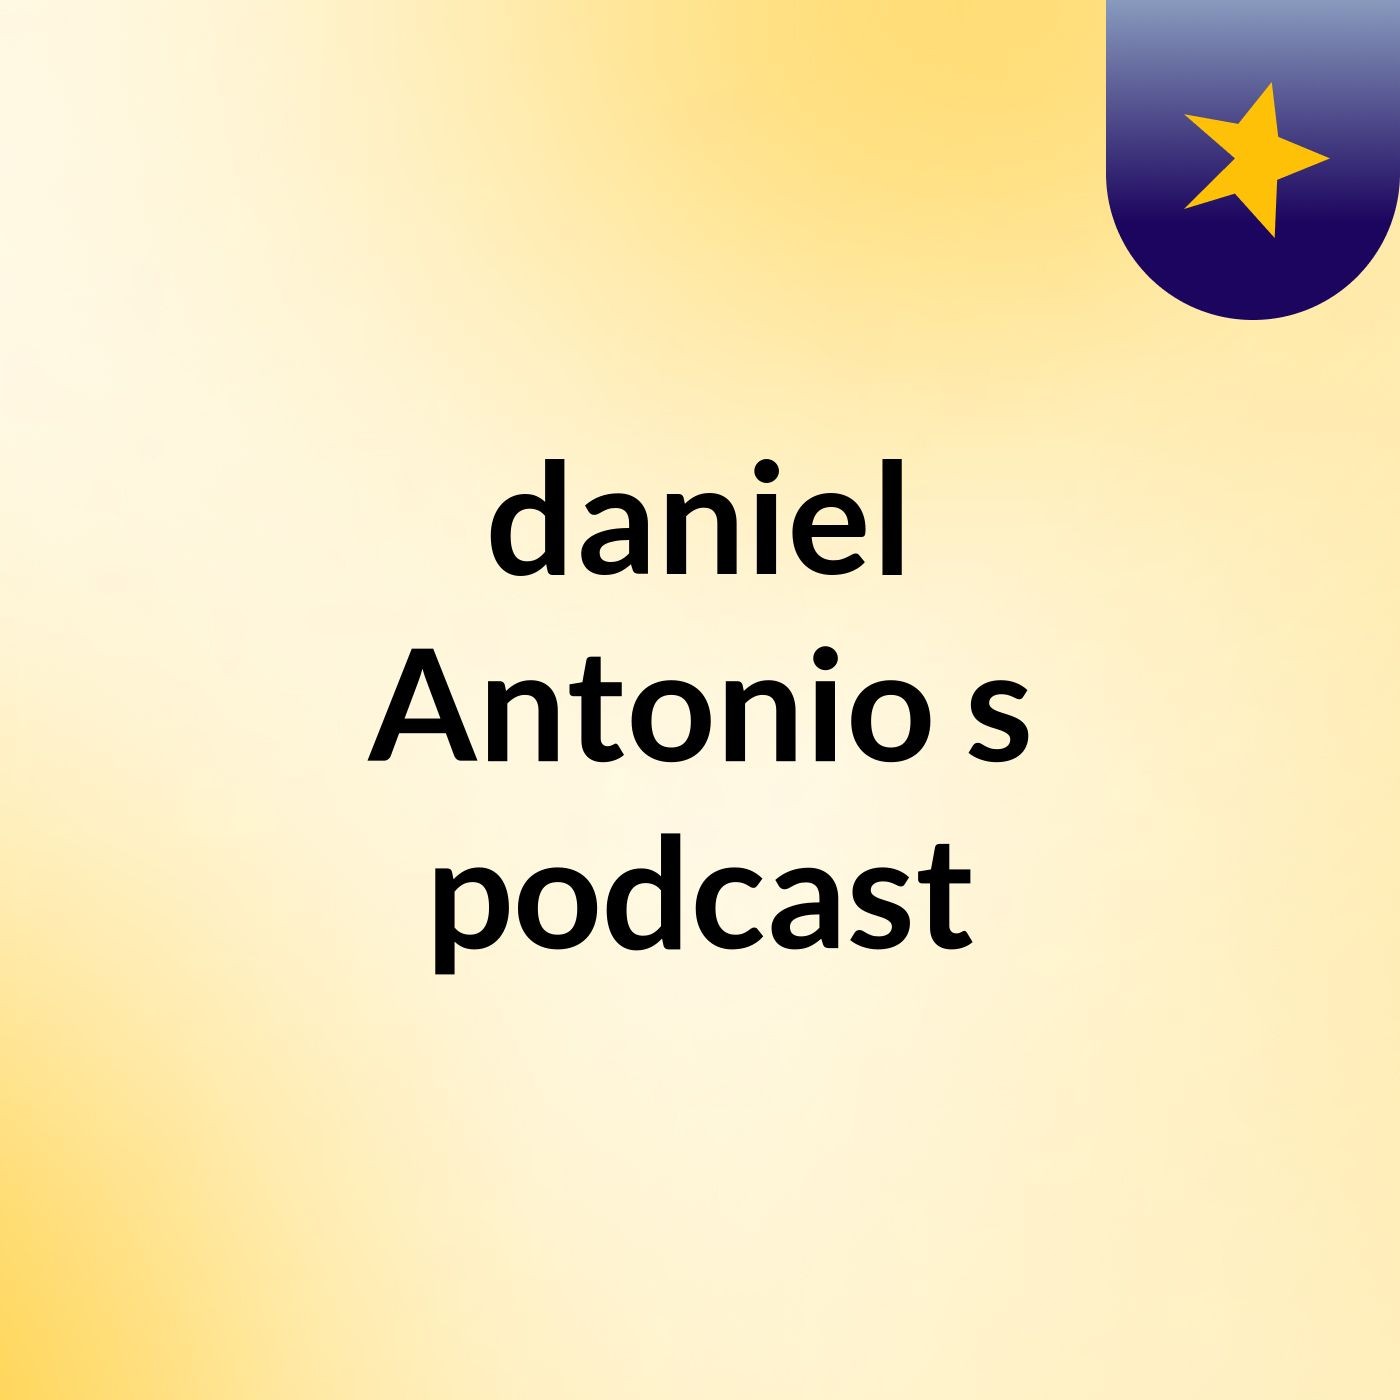 daniel Antonio's podcast